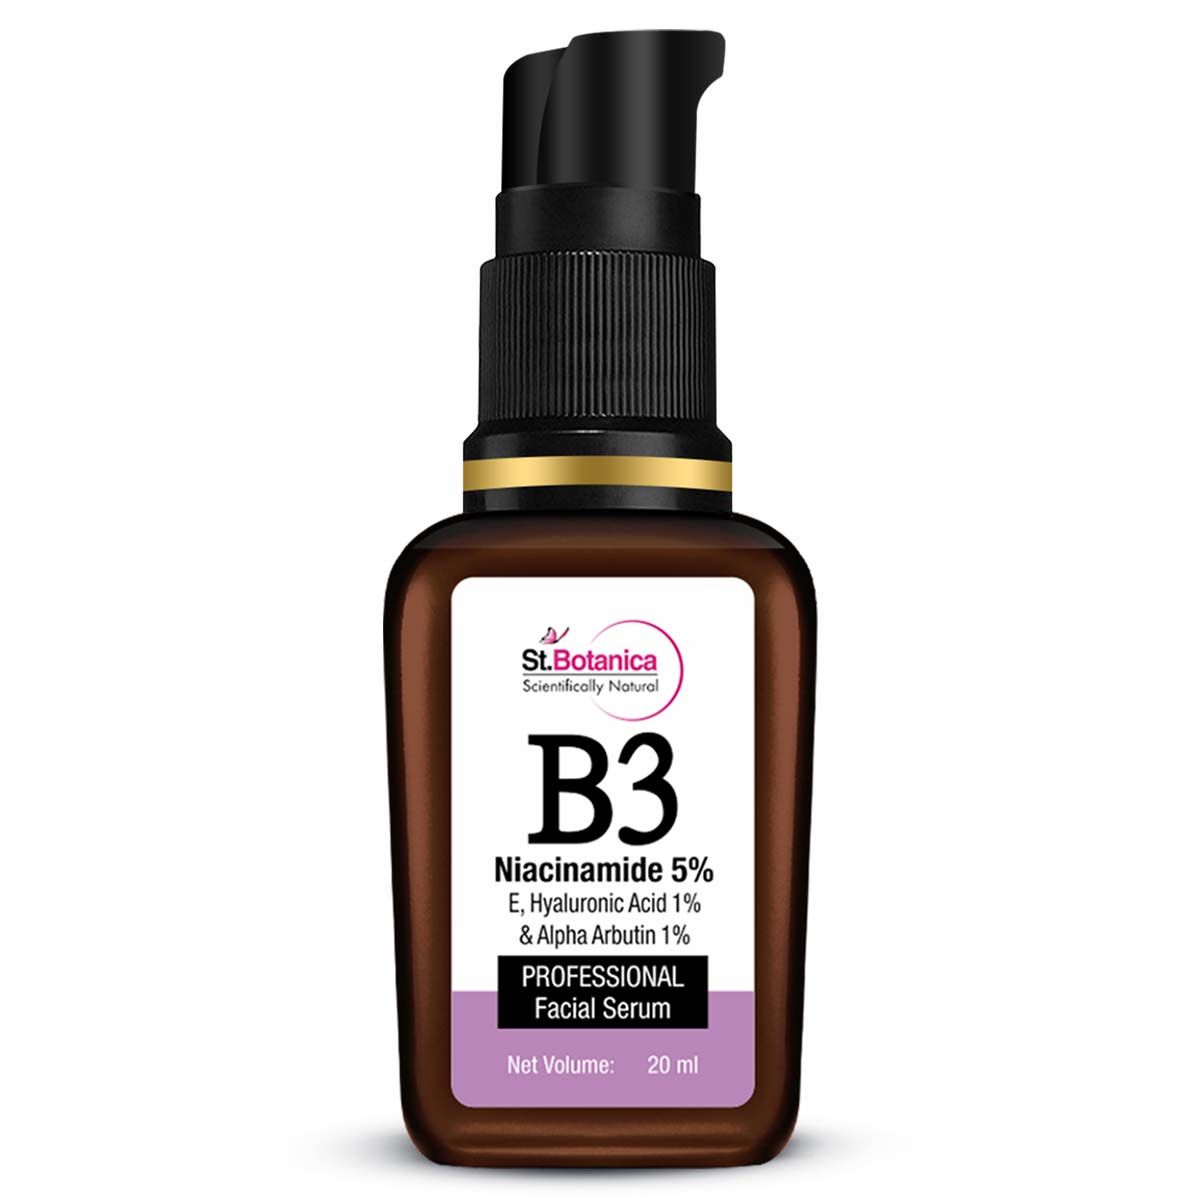 Buy St Botanica Niacinamide 5%, E + Hyaluronic Acid 1%, Alpha Arbutin 1% Face Serum for Oil-Free, Hydrated & Bright Skin | Pore Reducing Serum, 20 ml - Purplle